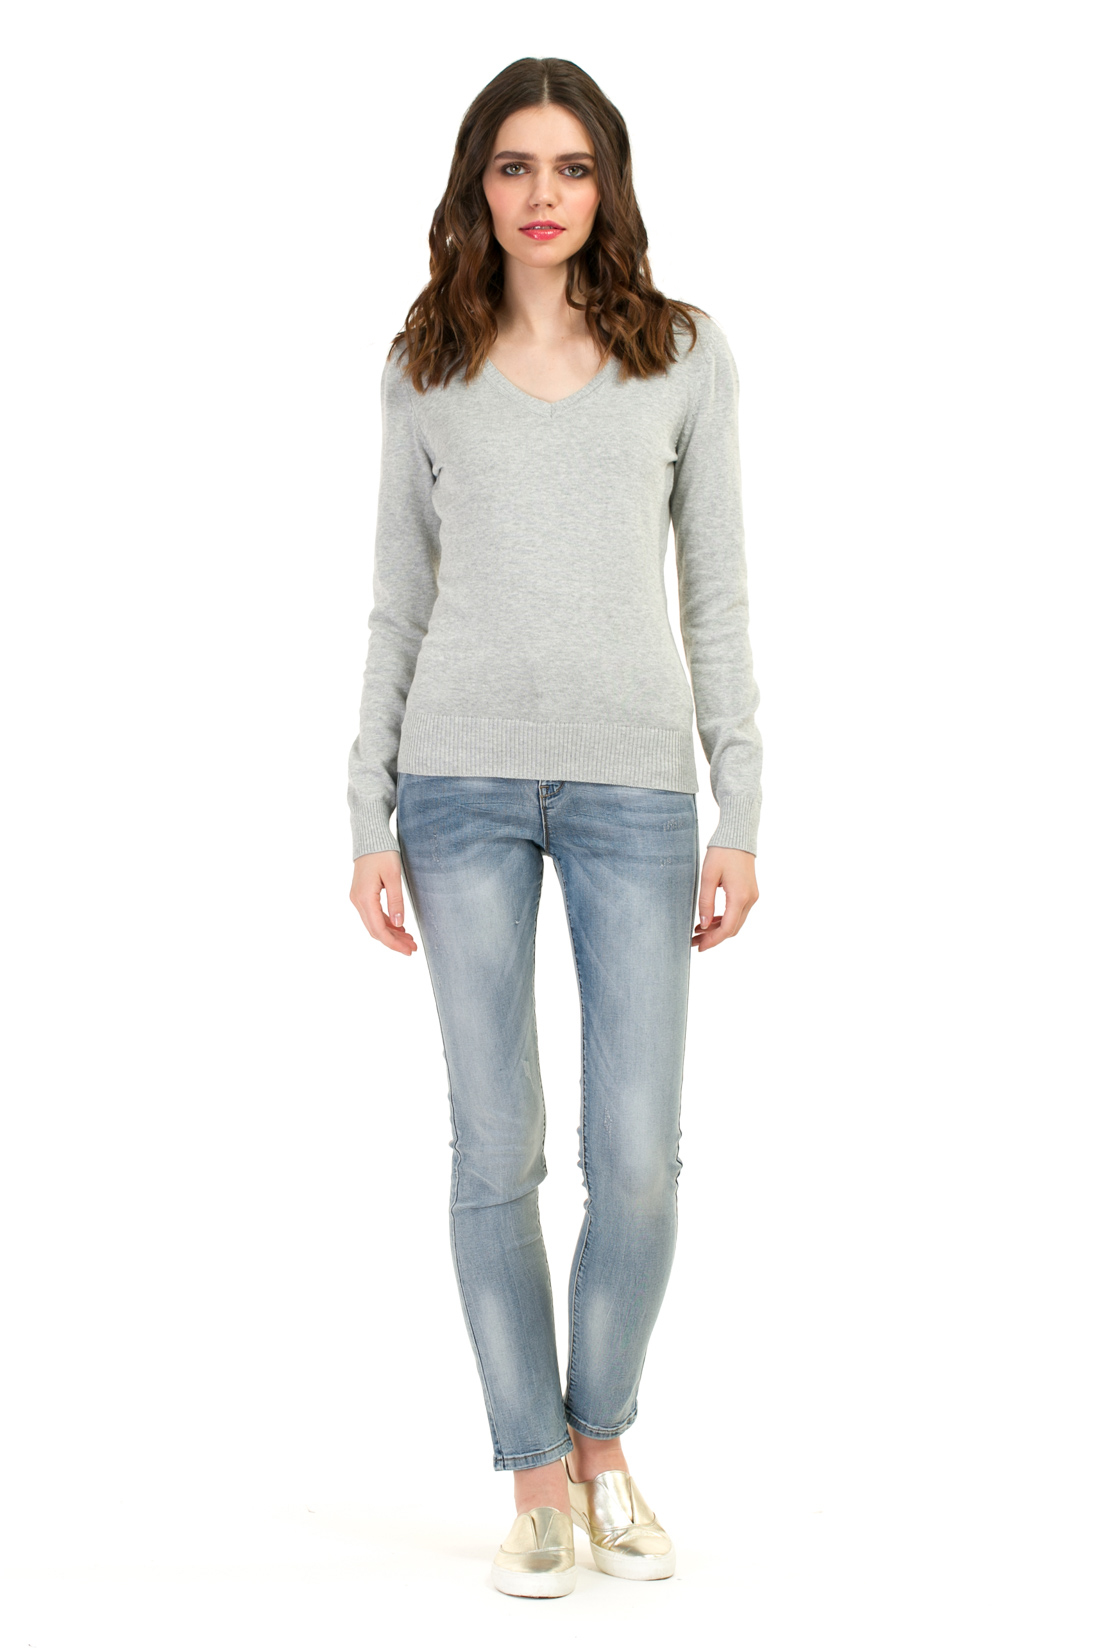 Базовый пуловер из хлопка (арт. baon B137201), размер XXL, цвет silver melange#серый Базовый пуловер из хлопка (арт. baon B137201) - фото 5